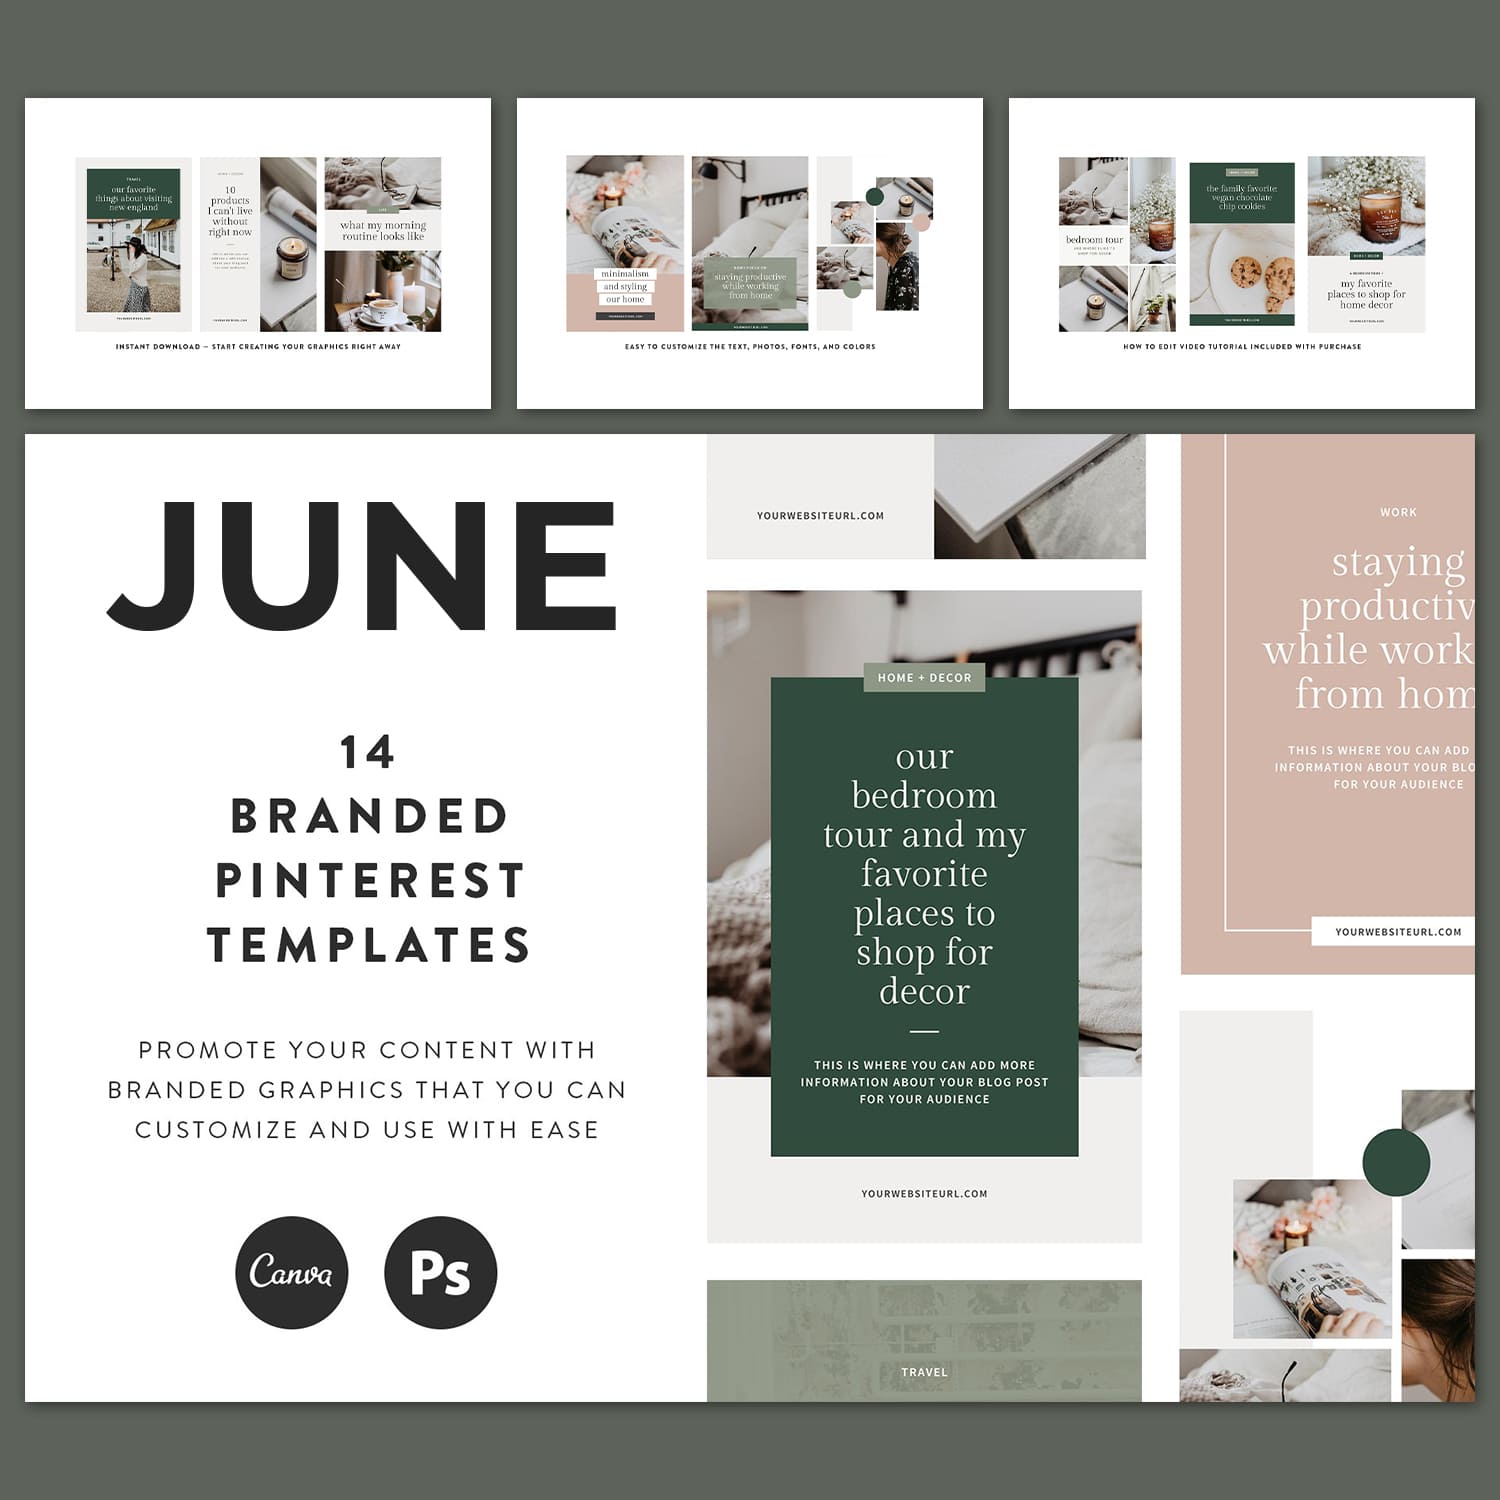 June - 14 Branded Pinterest Templates Preview.